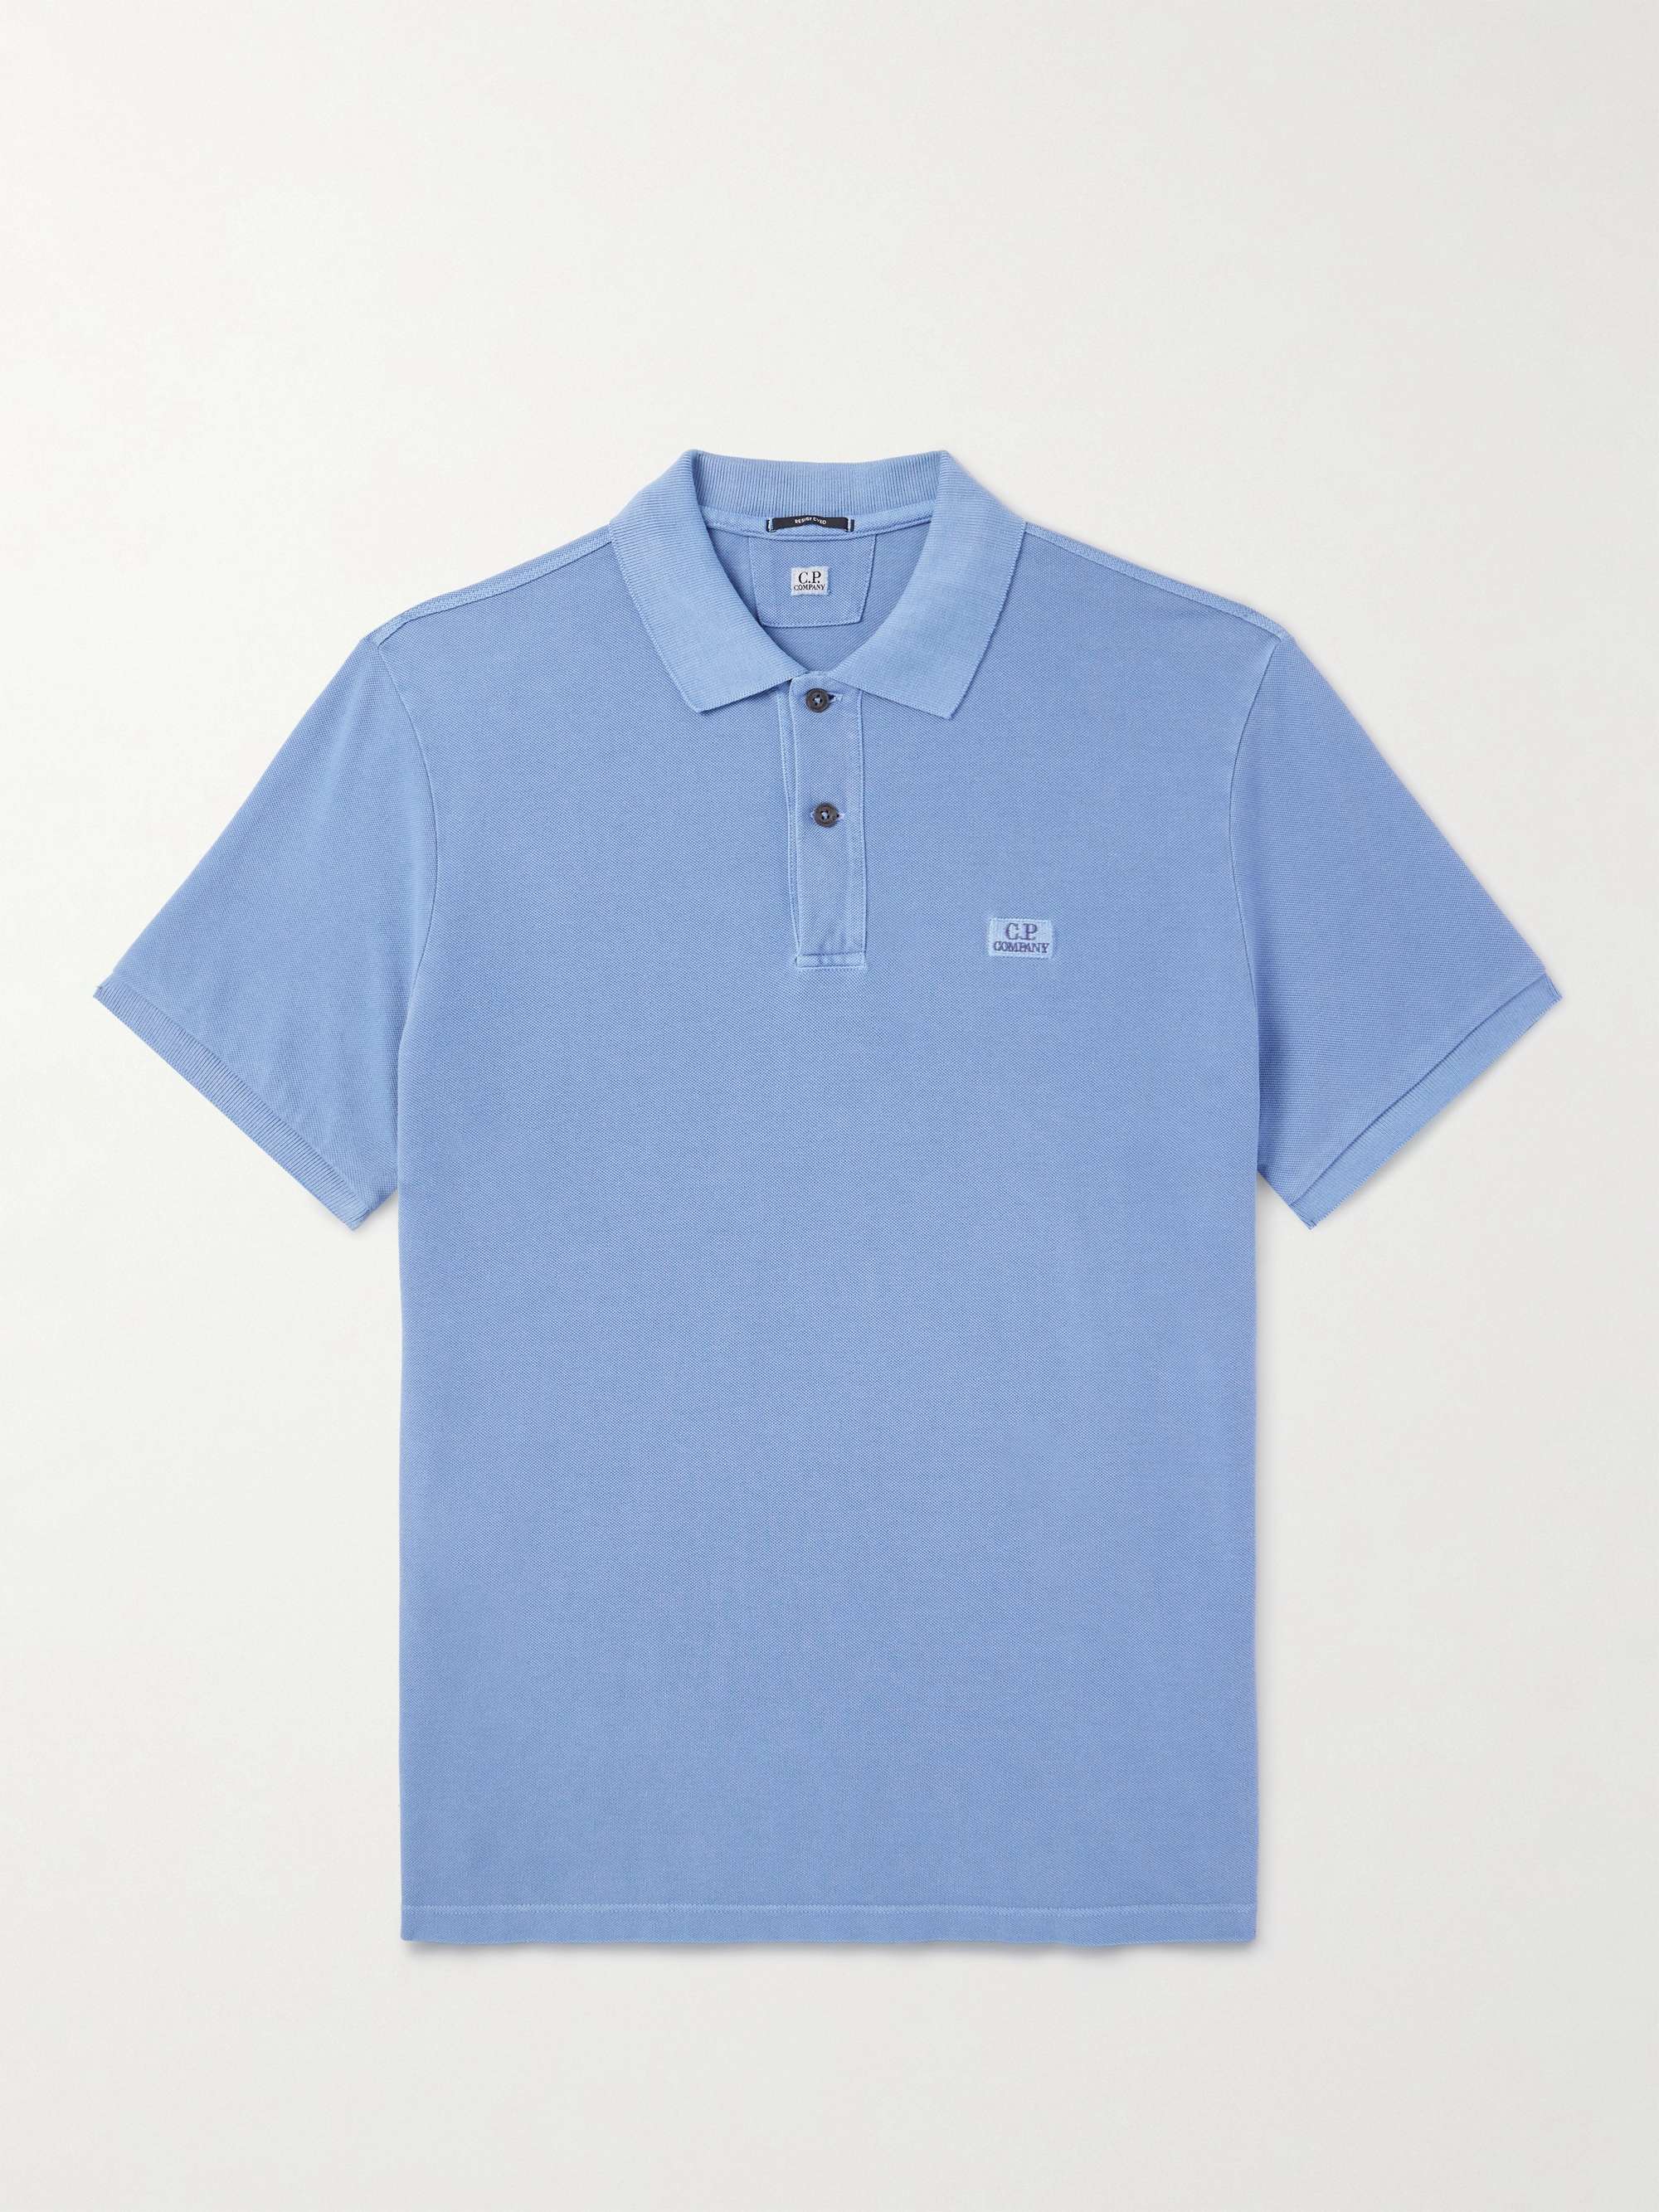 C.P. Company Men's Slim-Fit Polo Shirt